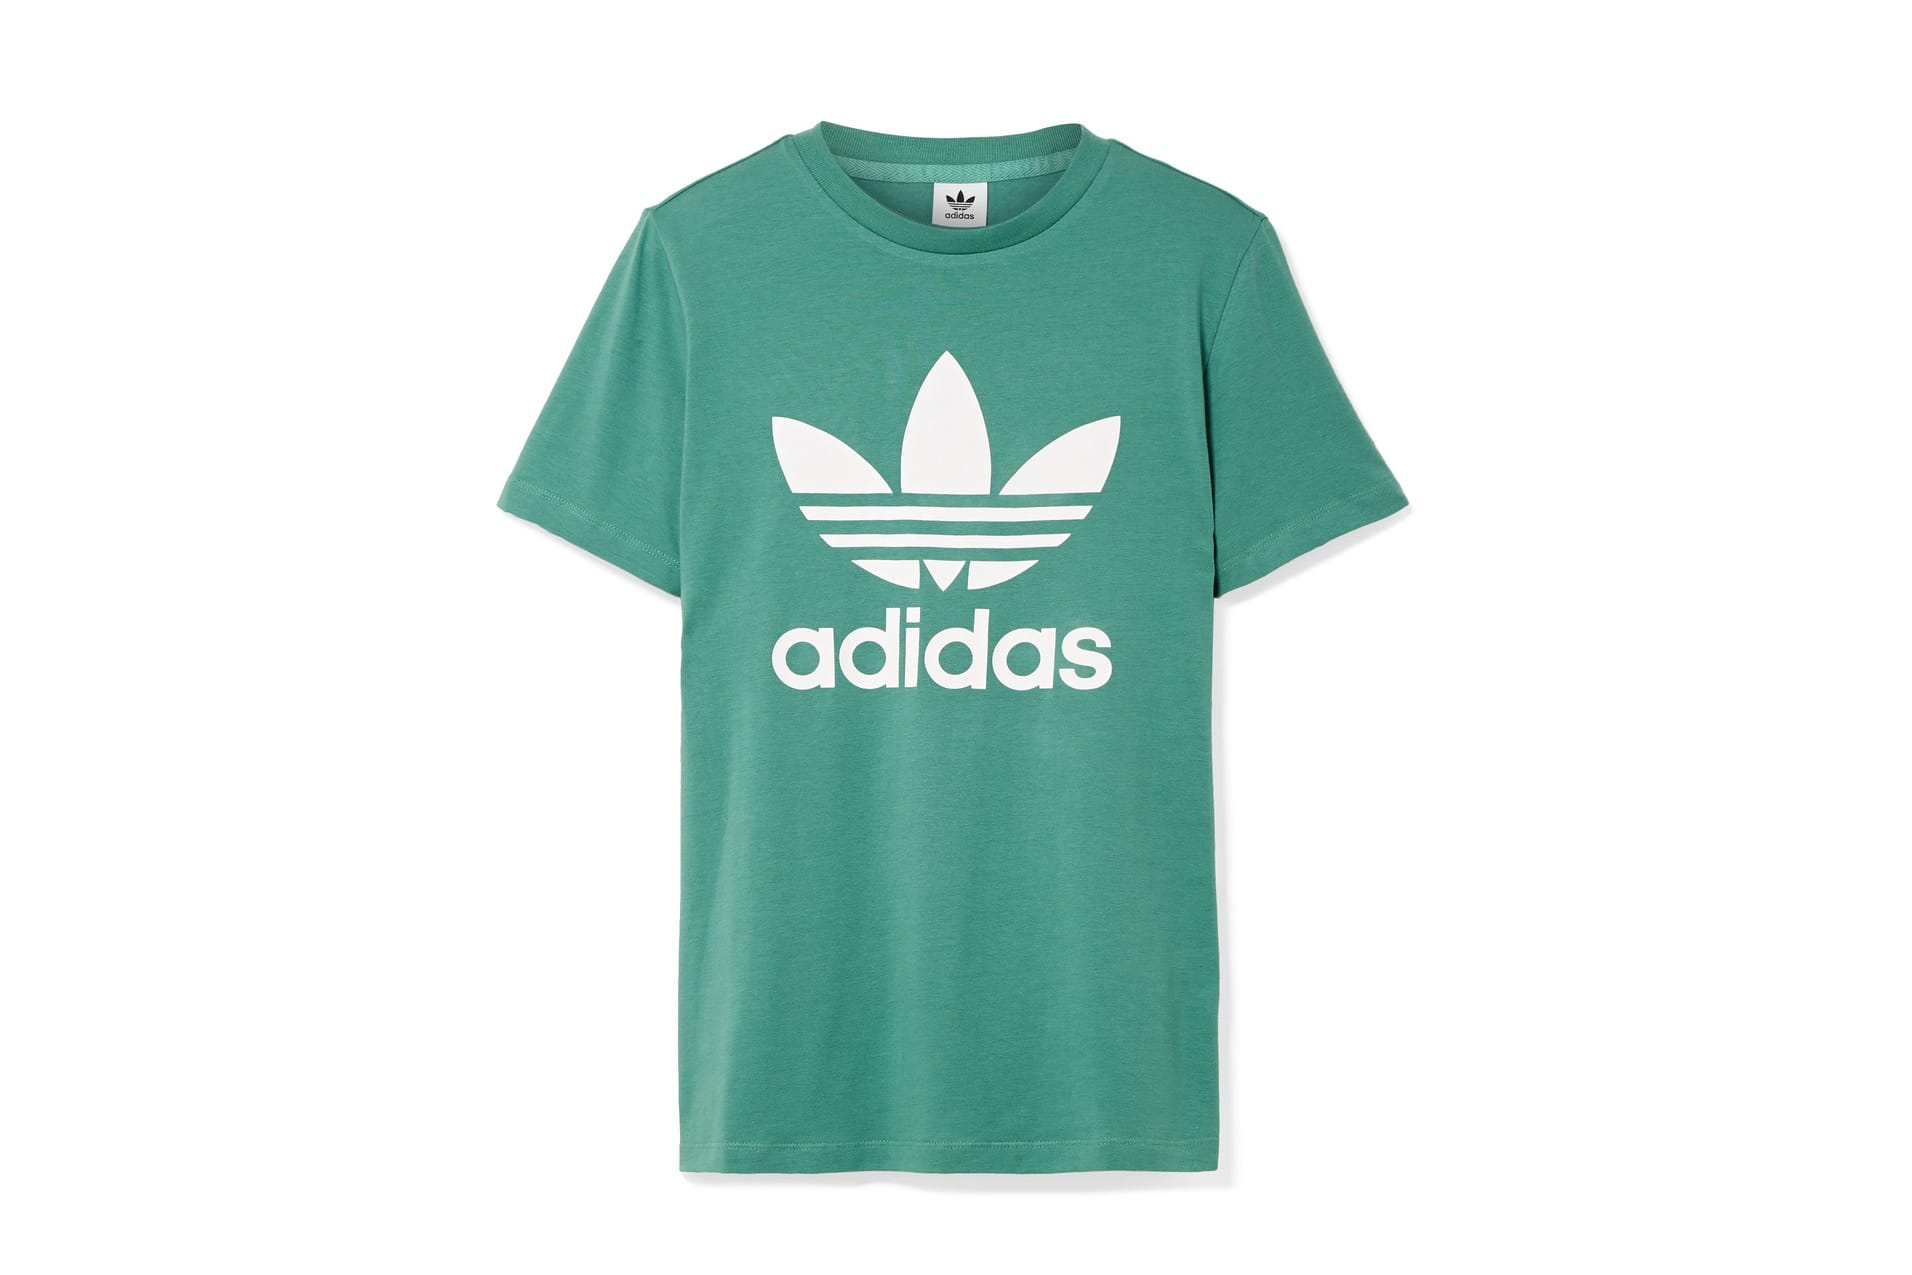 white adidas t shirt with green logo